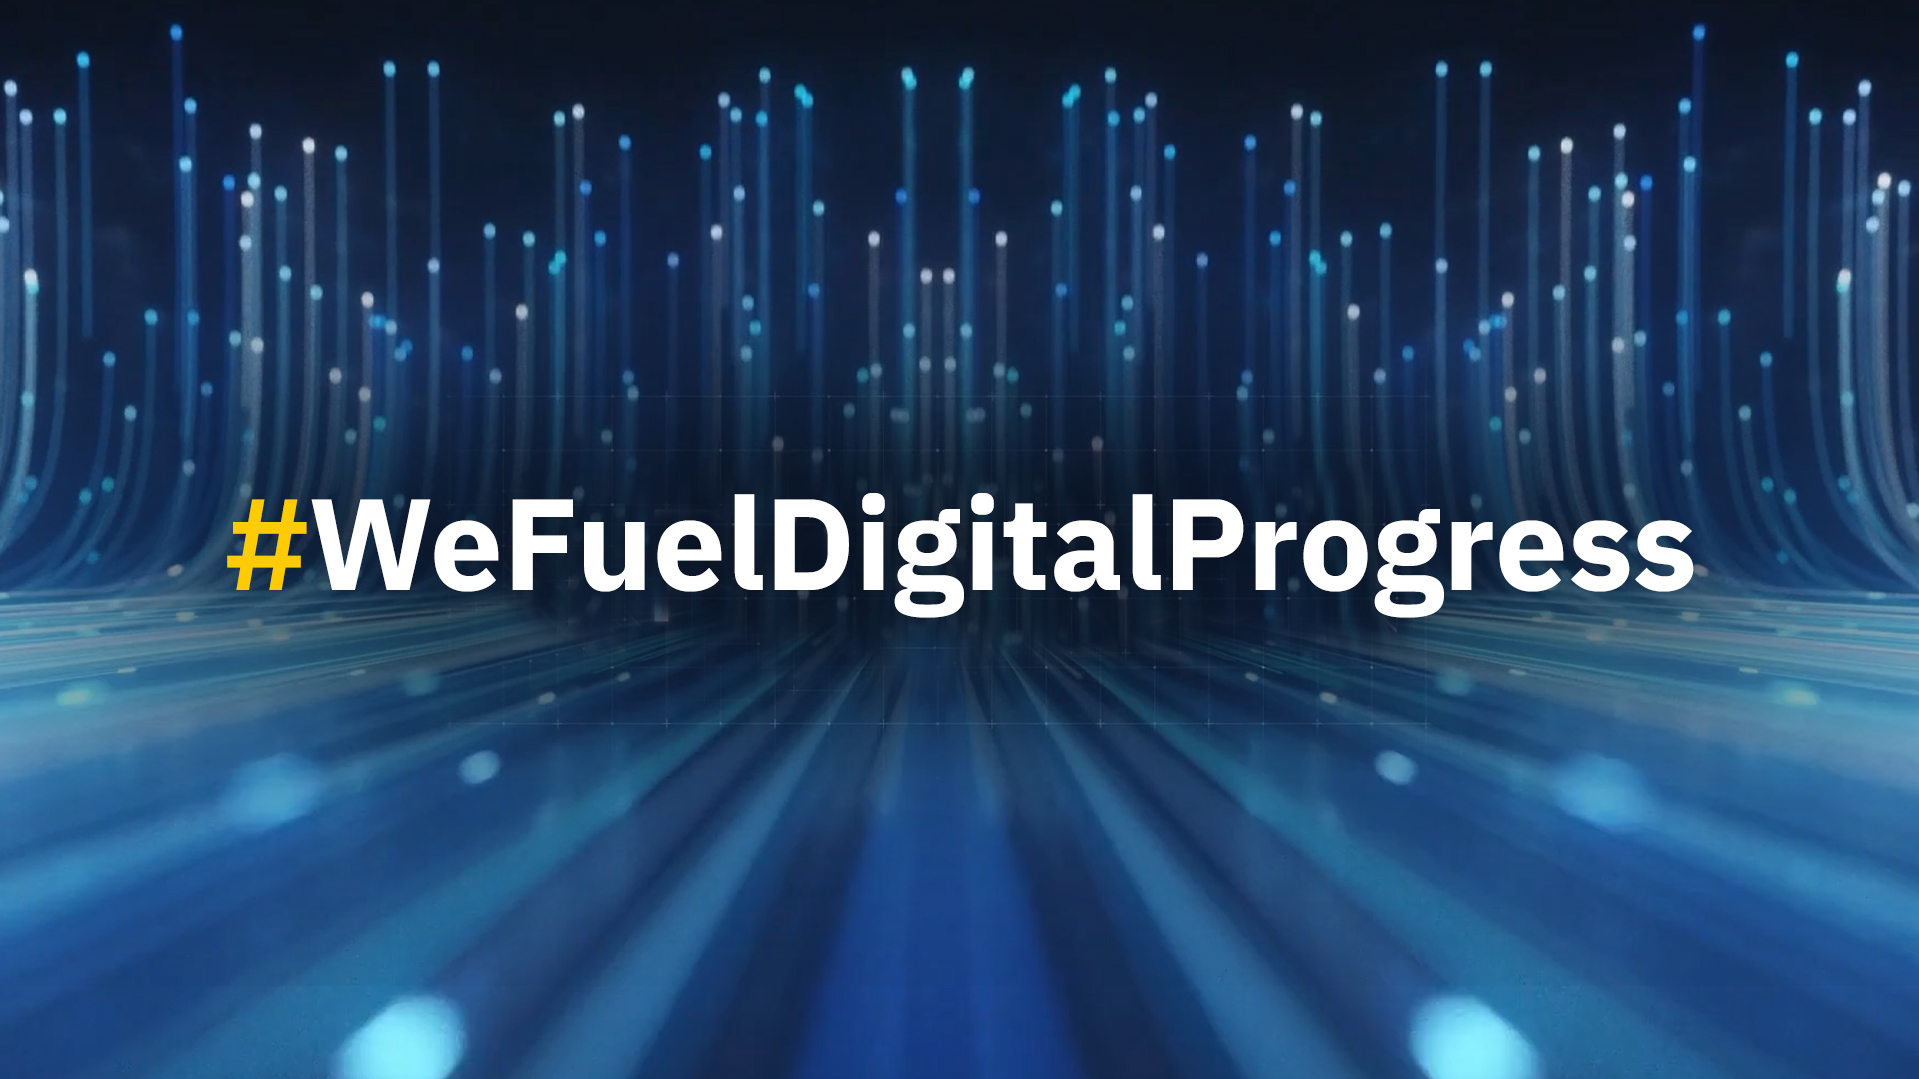 Progress is our Passion! #WeFuelDigitalProgress